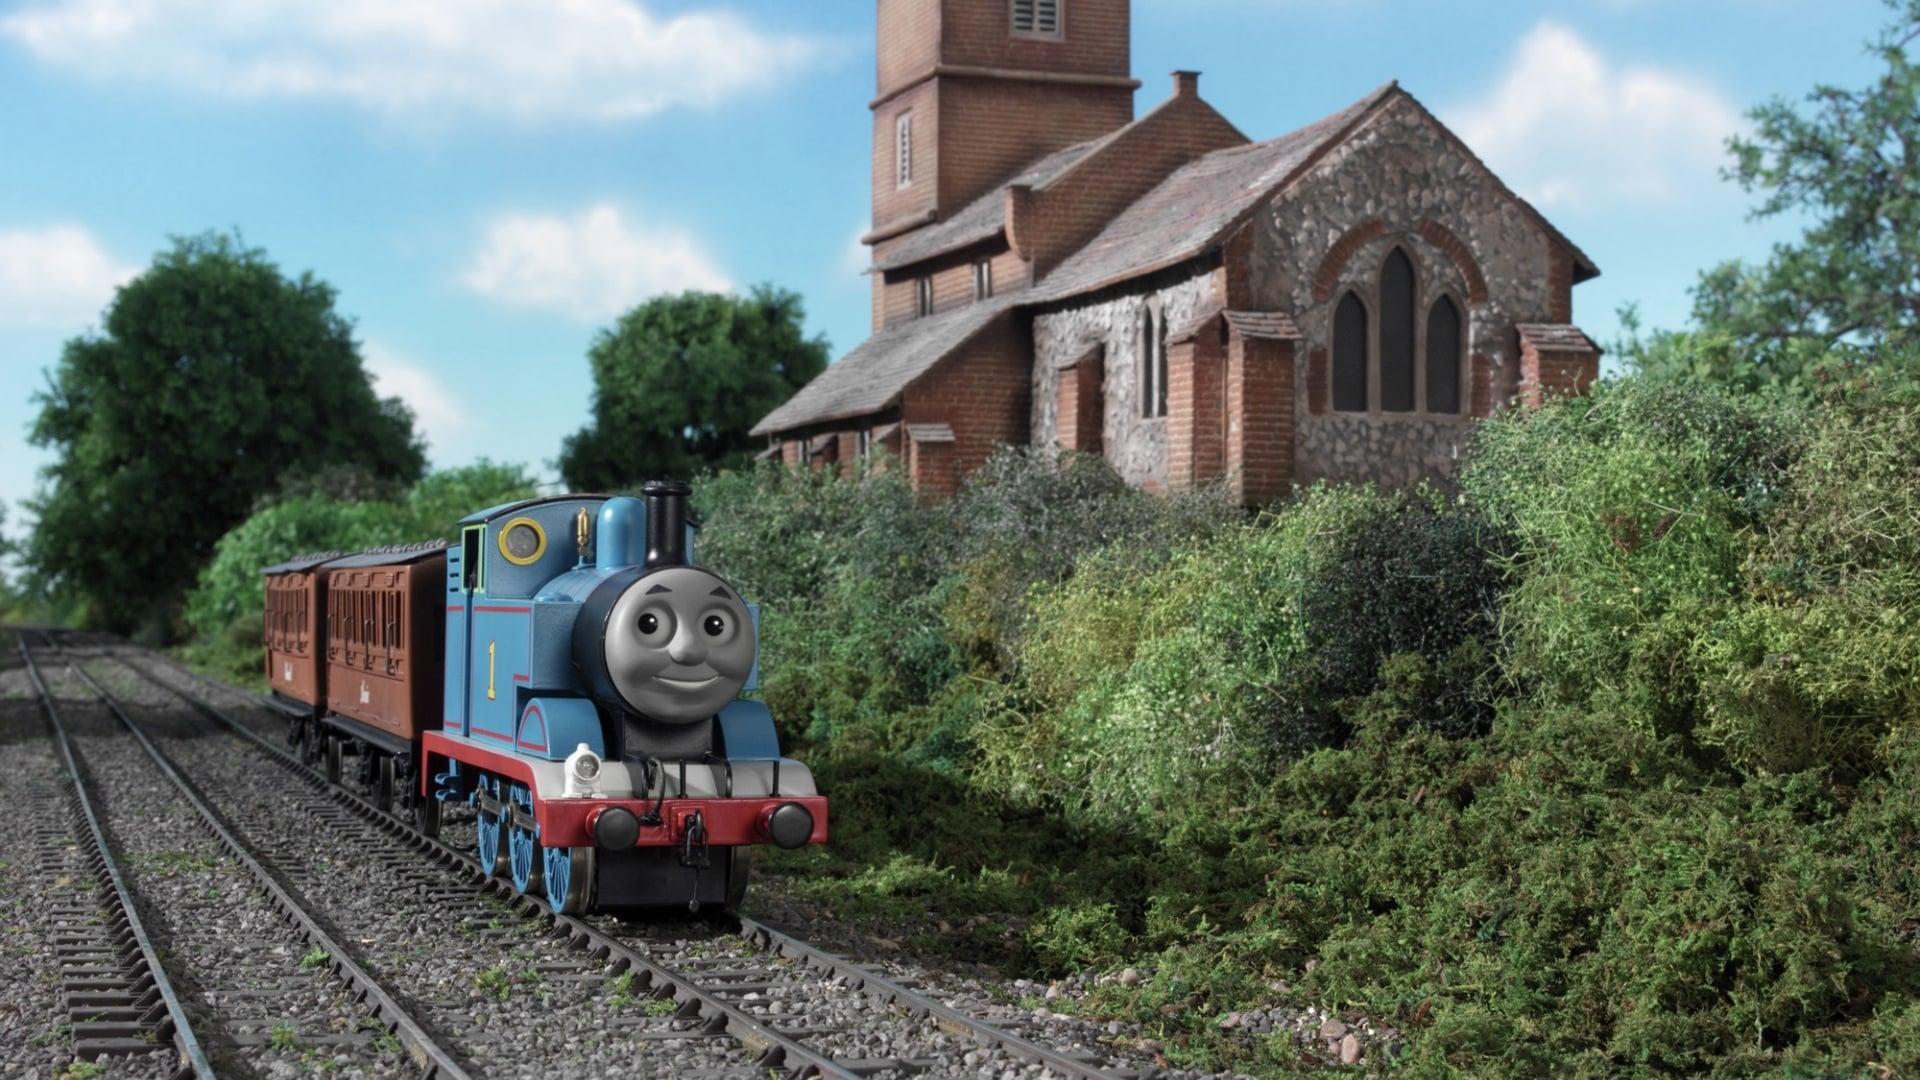 Thomas & Friends backdrop